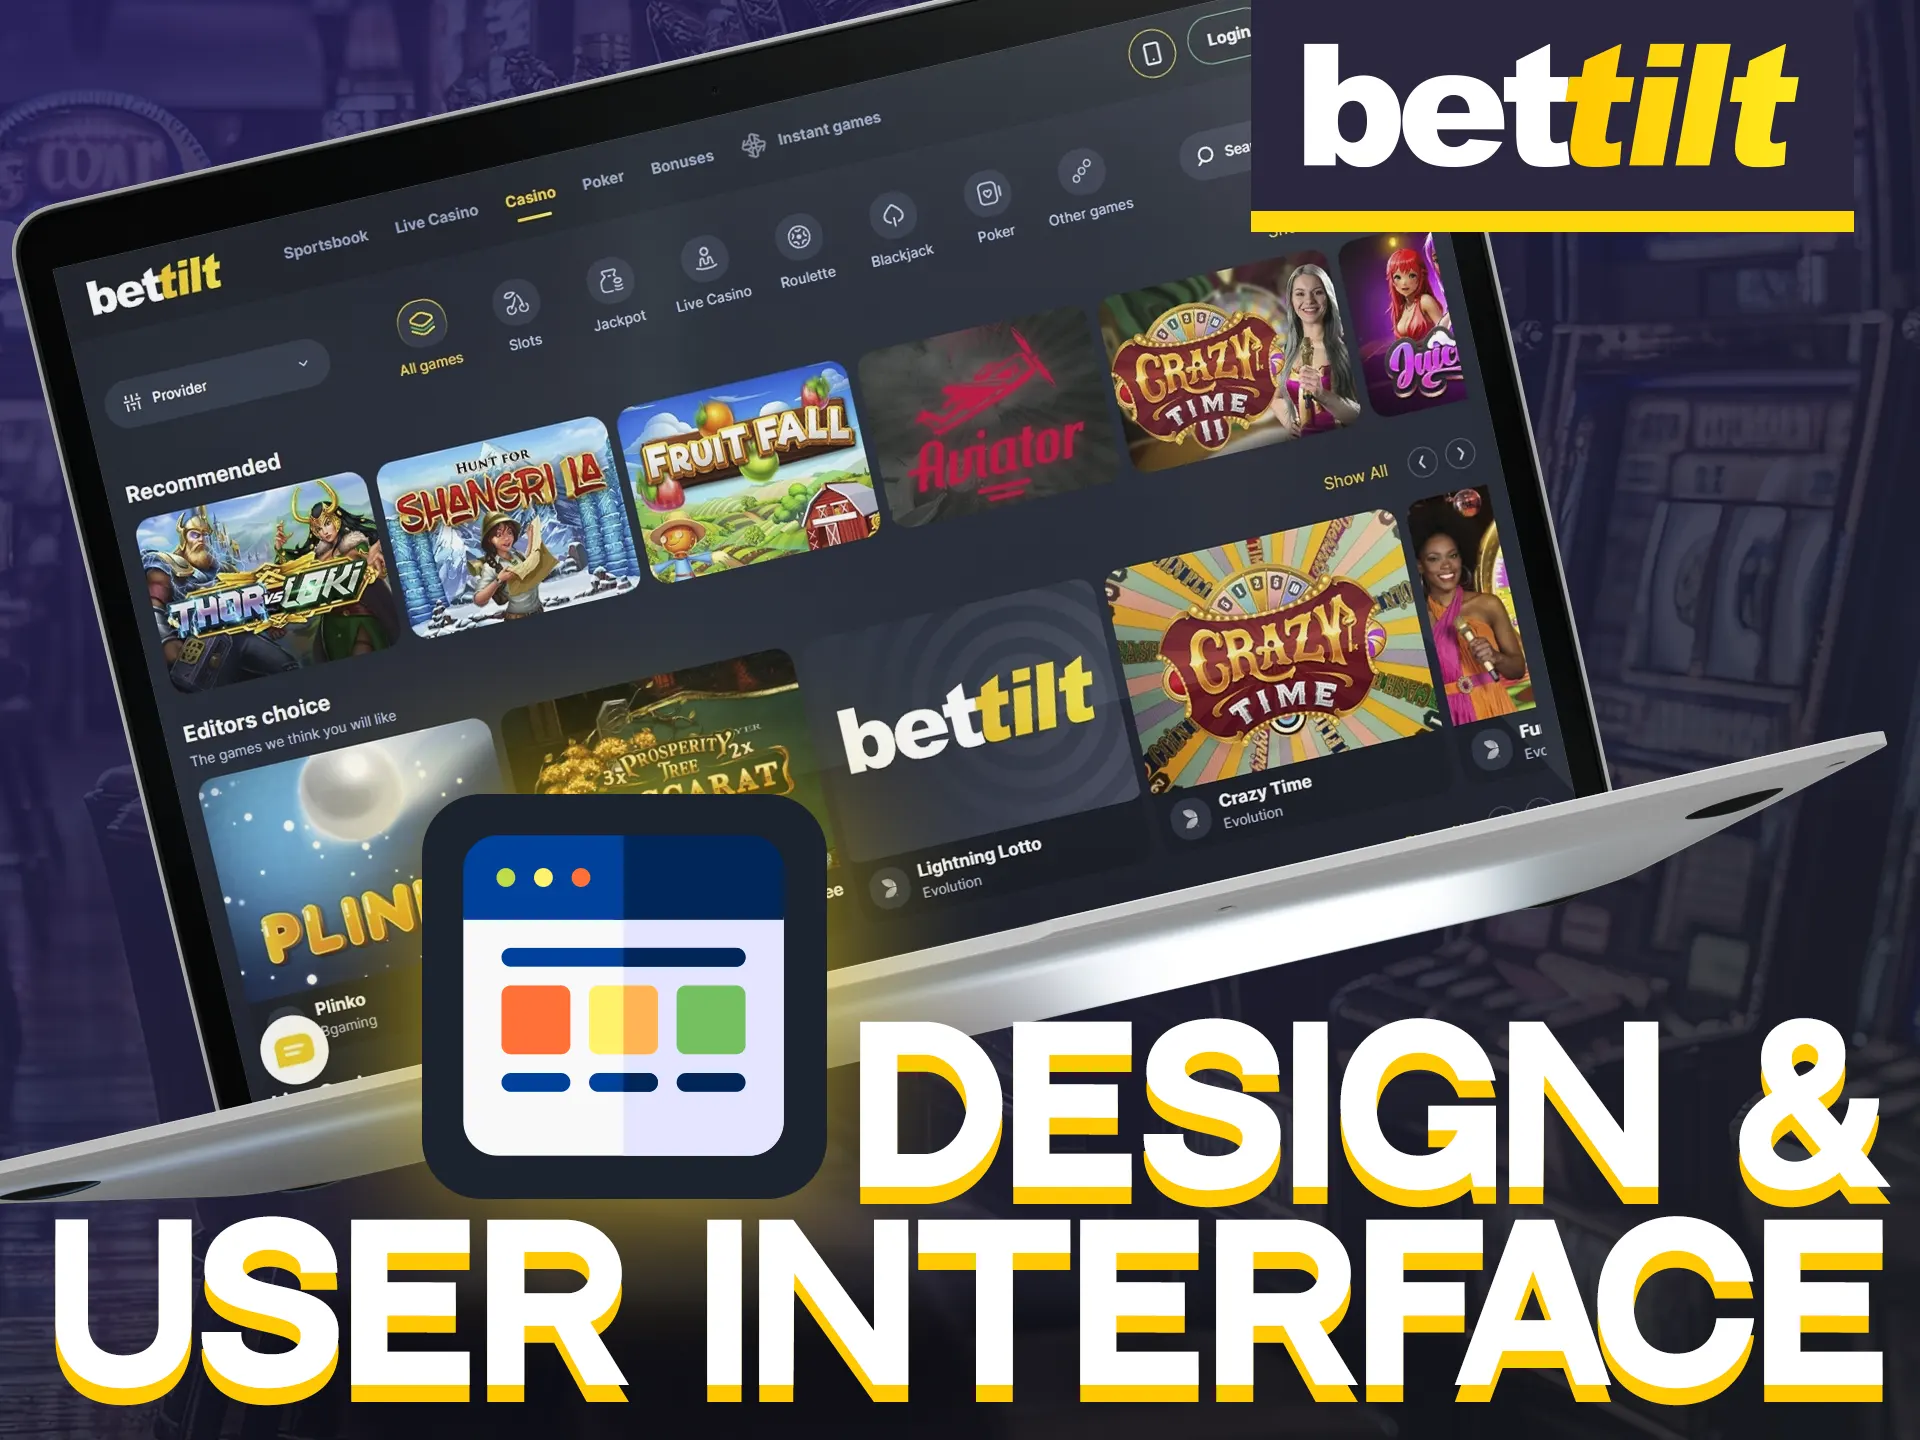 Bettilt's casino design is modern and user-friendly.